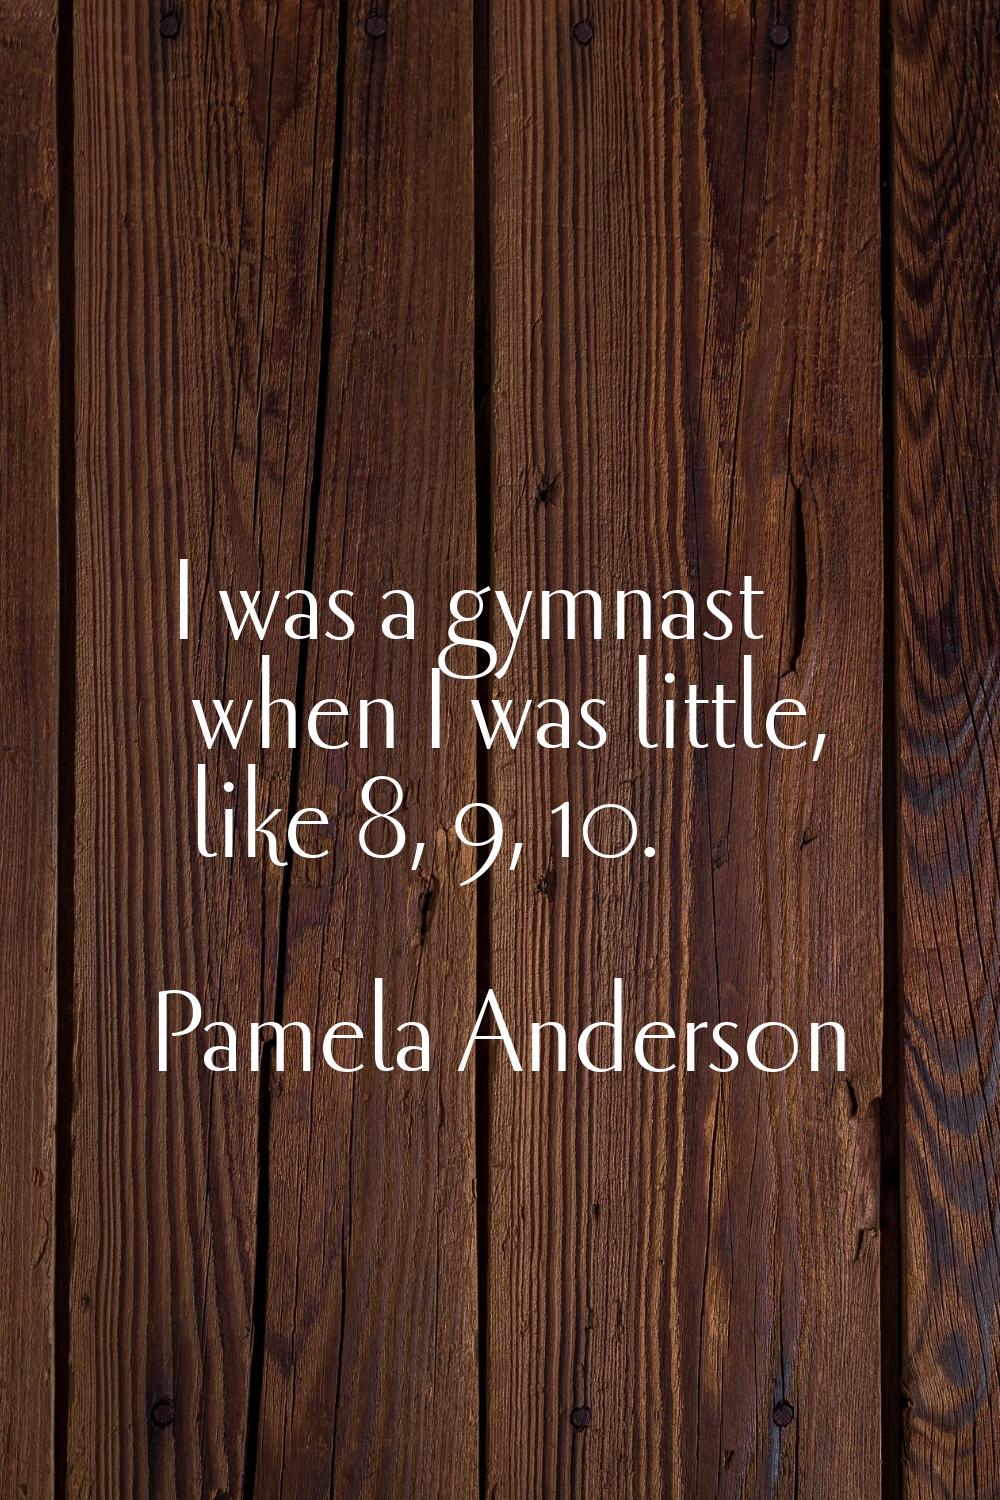 I was a gymnast when I was little, like 8, 9, 10.